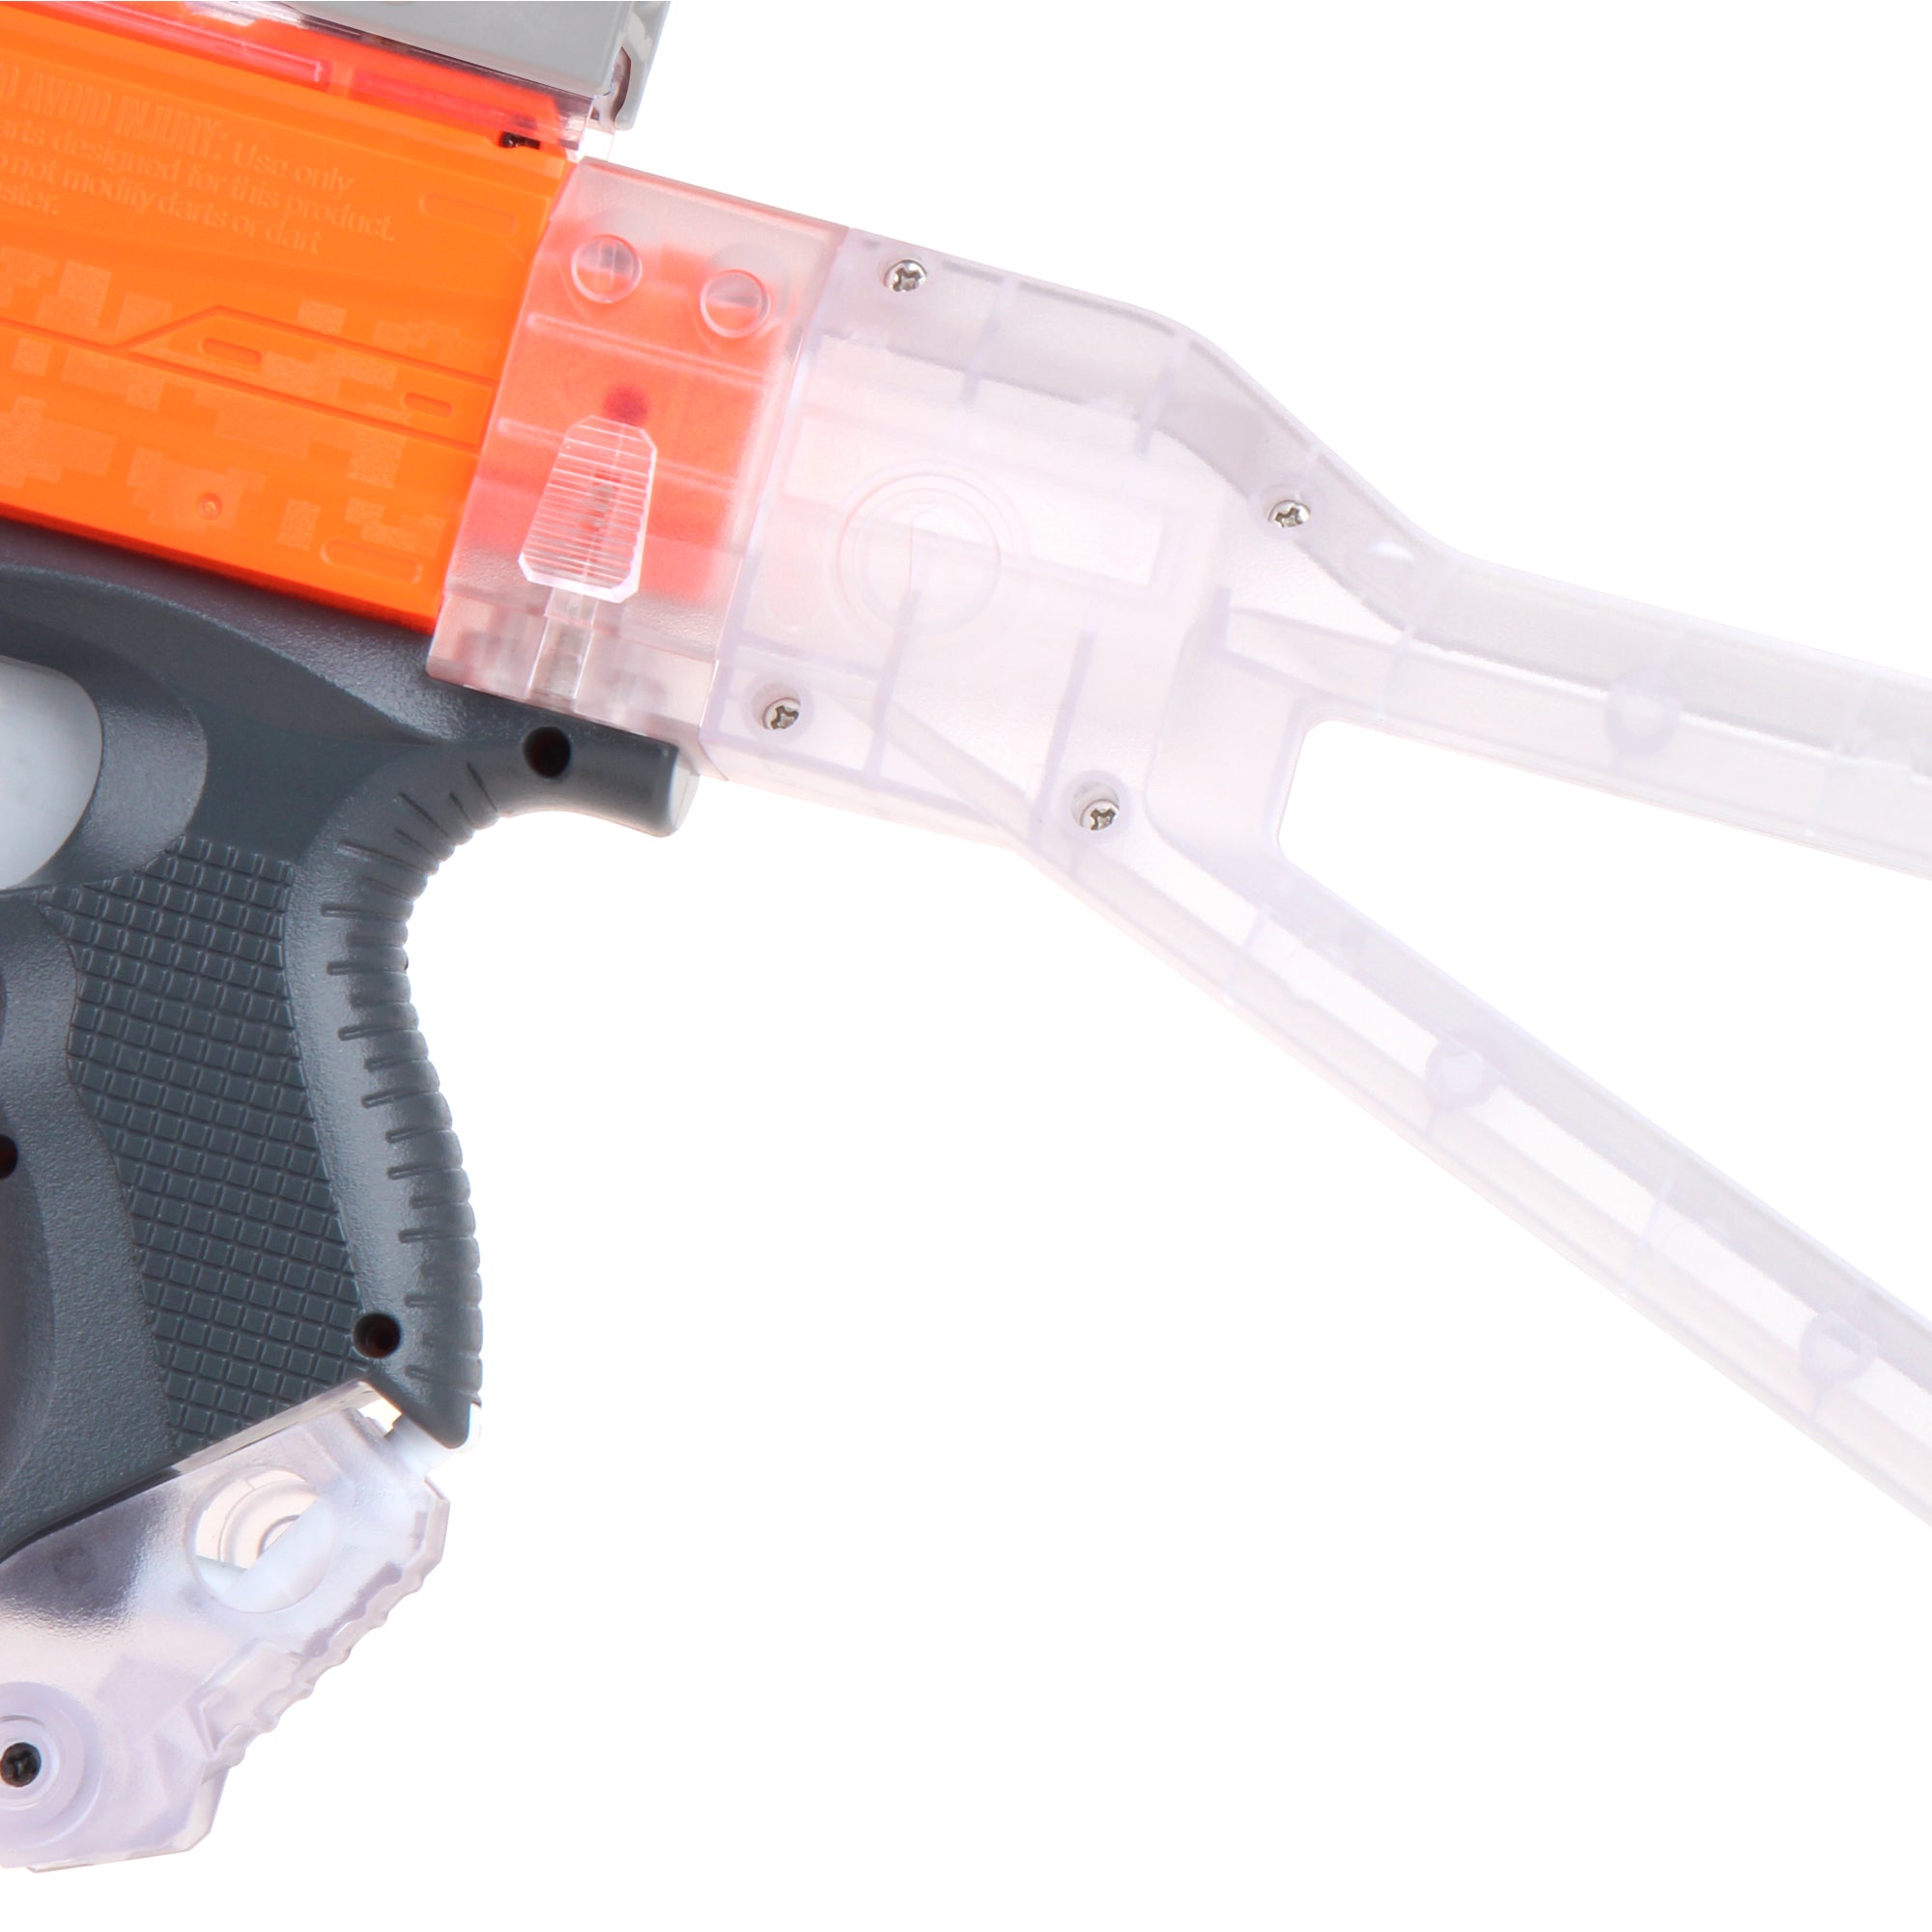 Worker Mod Kriss Vector Imitation Clear Kits J Combo Items for Nerf STRYFE Modify Toy - BlasterMOD